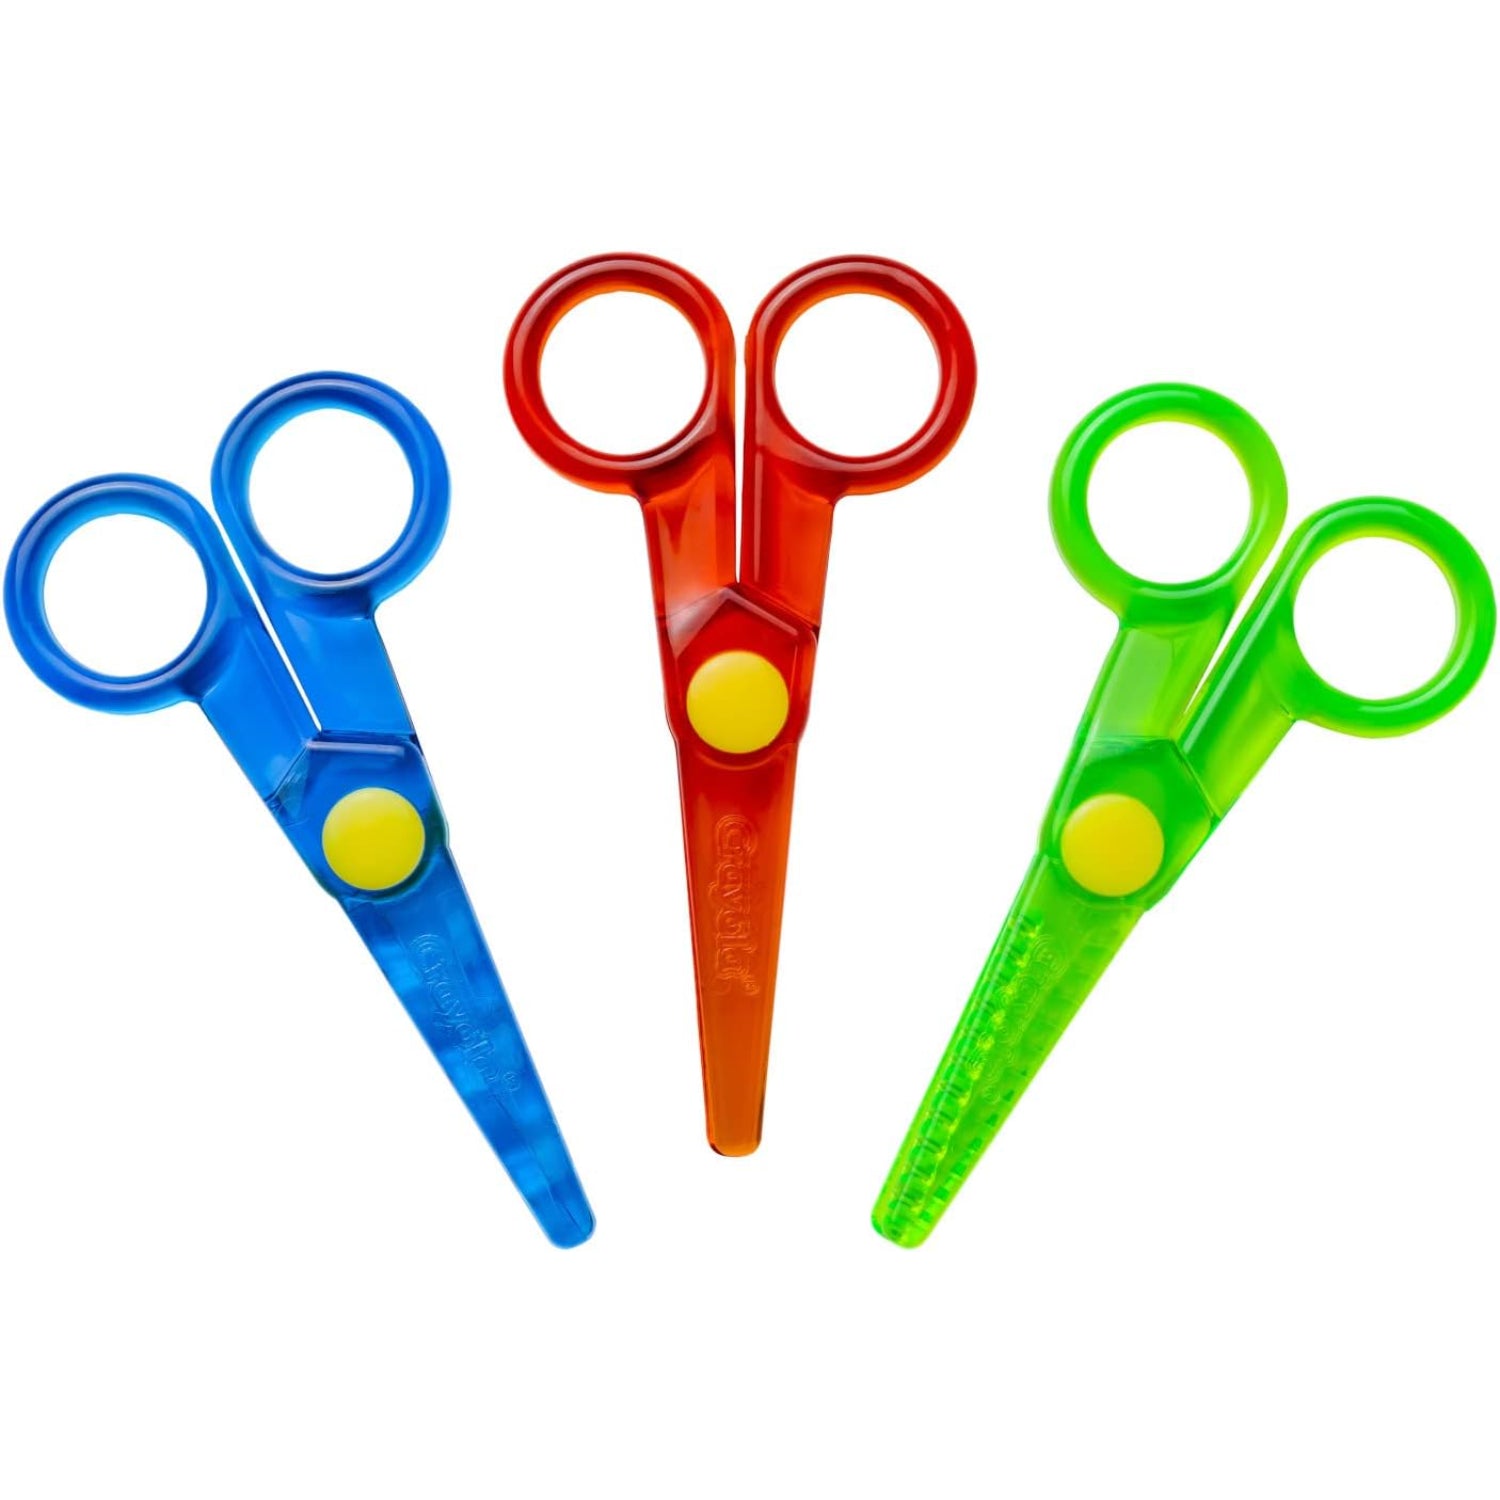 Training Scissors for Kids, Preschool Children Safety Scissors Set - Safe  Round Blunt Tip - Perfect for Developing Cutting Skills for Arts & Crafts